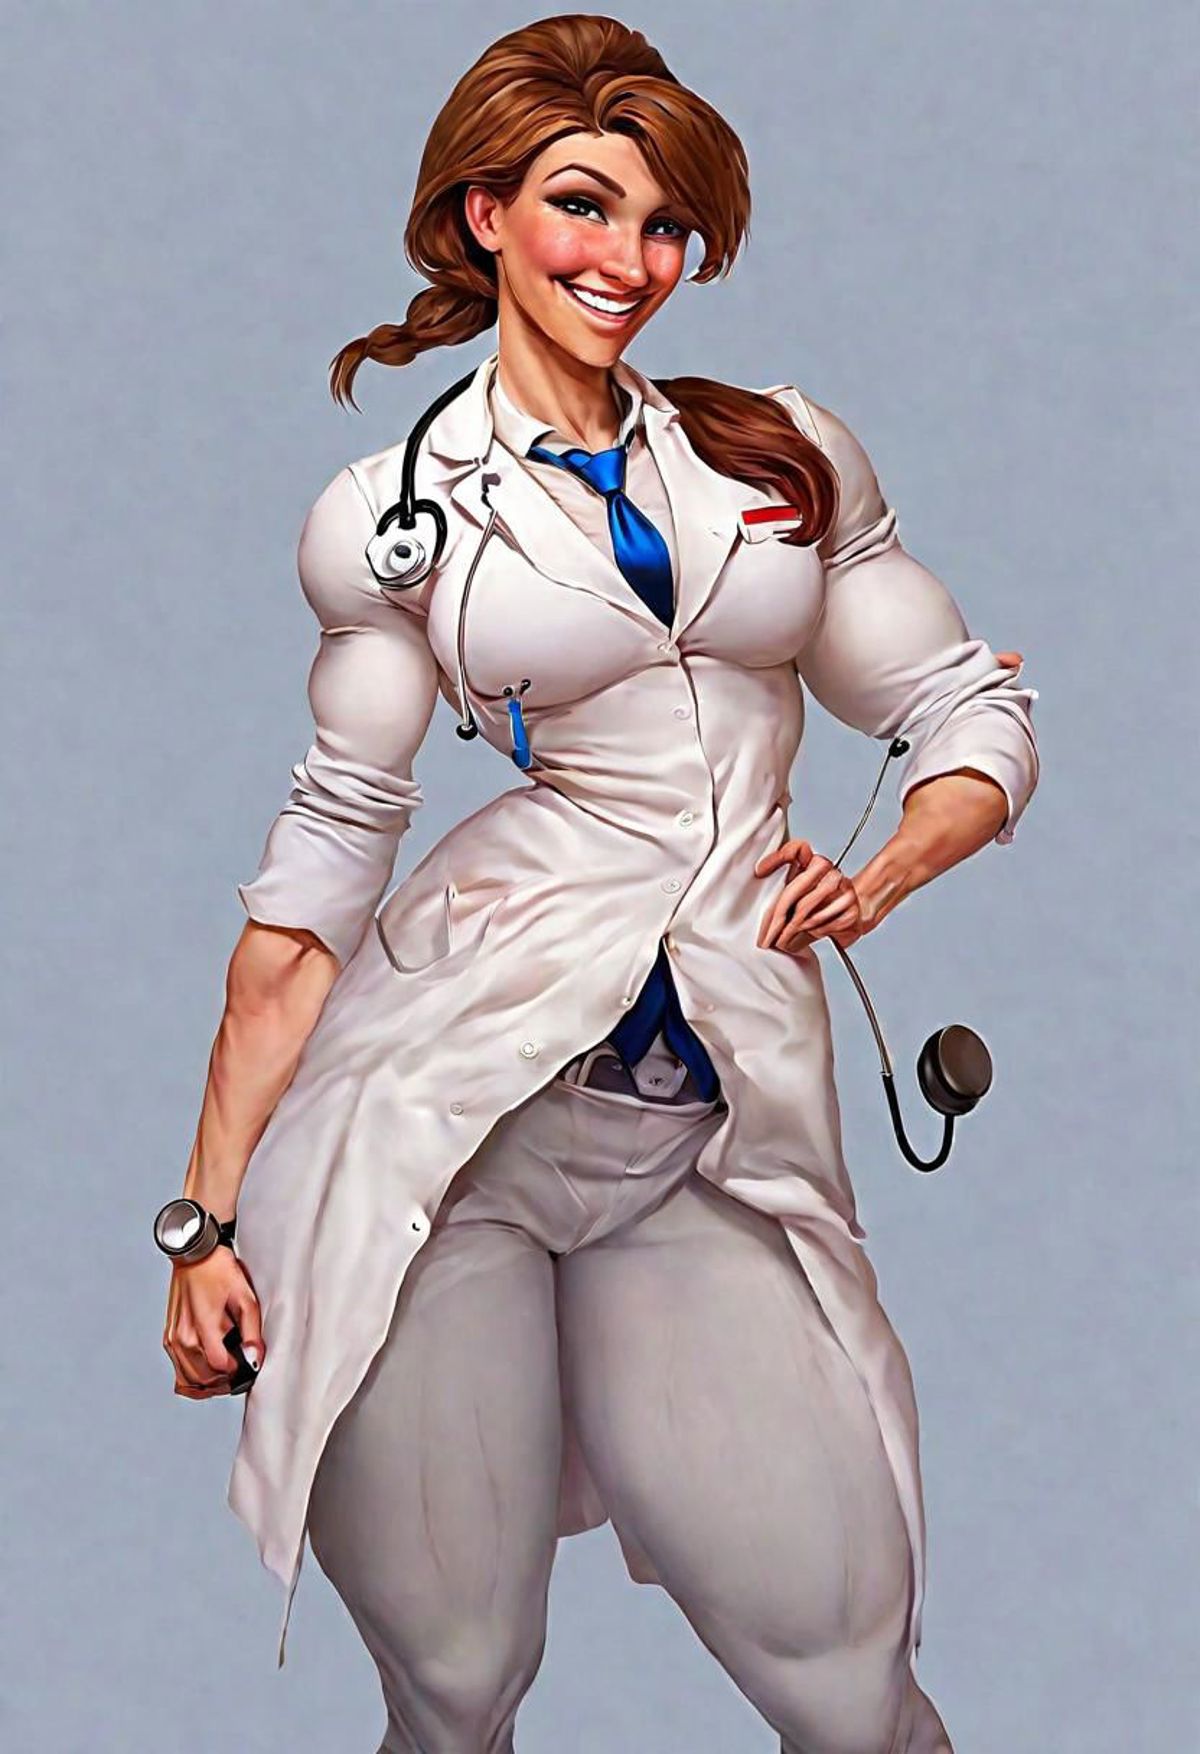 AI model image by femalemuscle